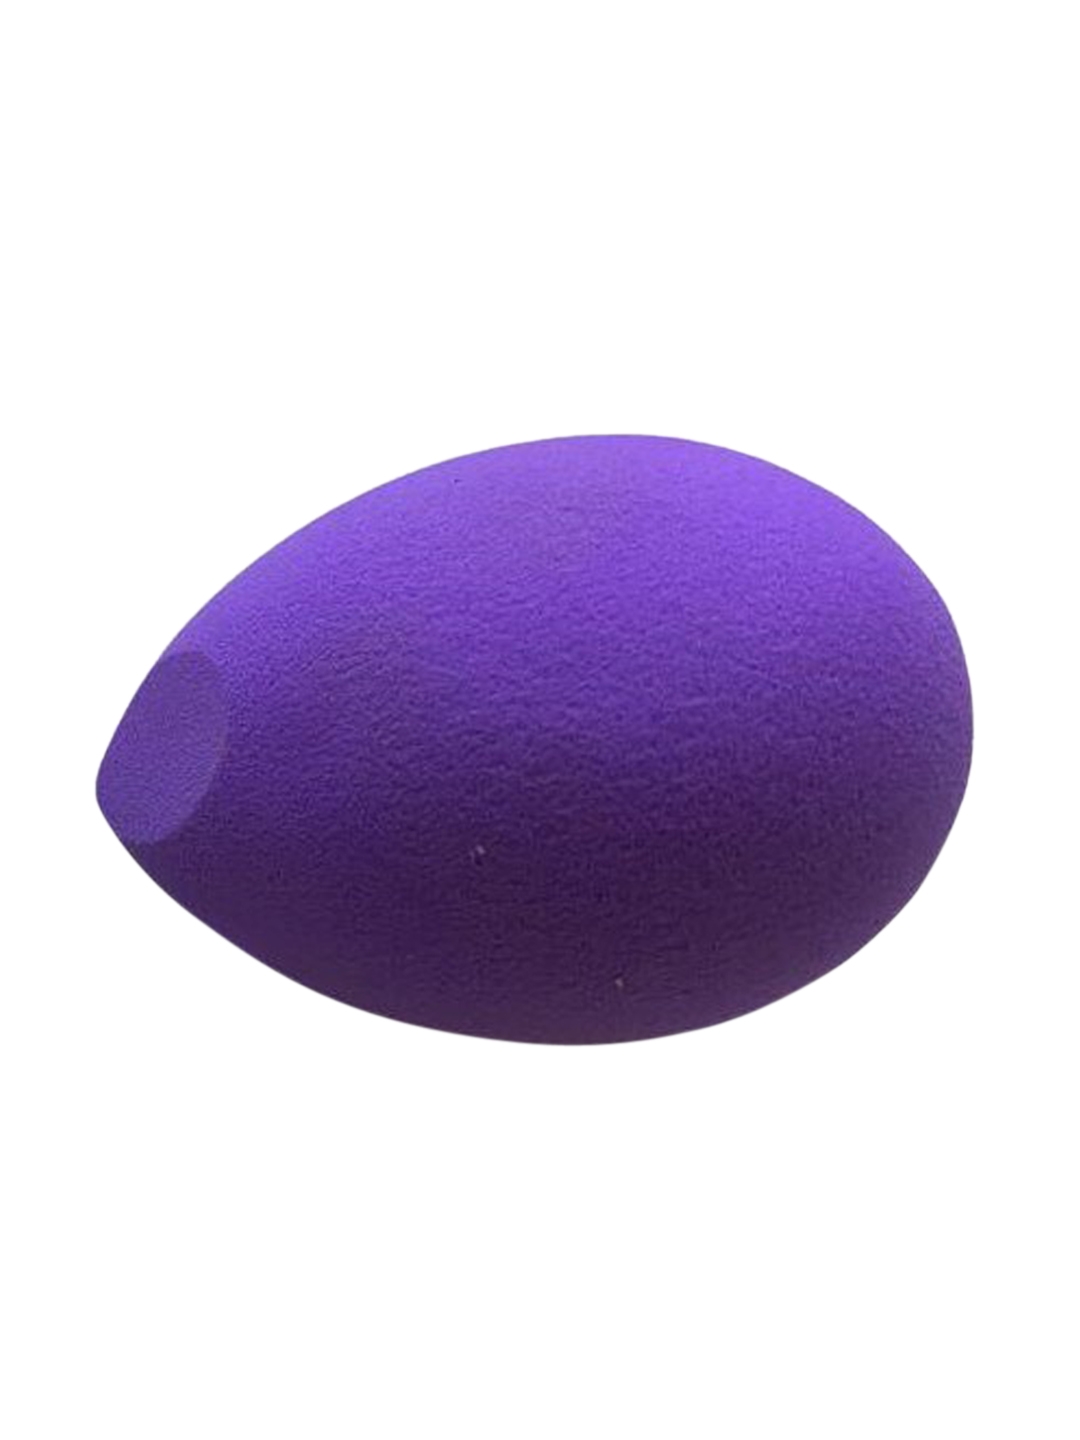 Plush World Purple Double Cut Shape Beauty Blender Makeup Sponge